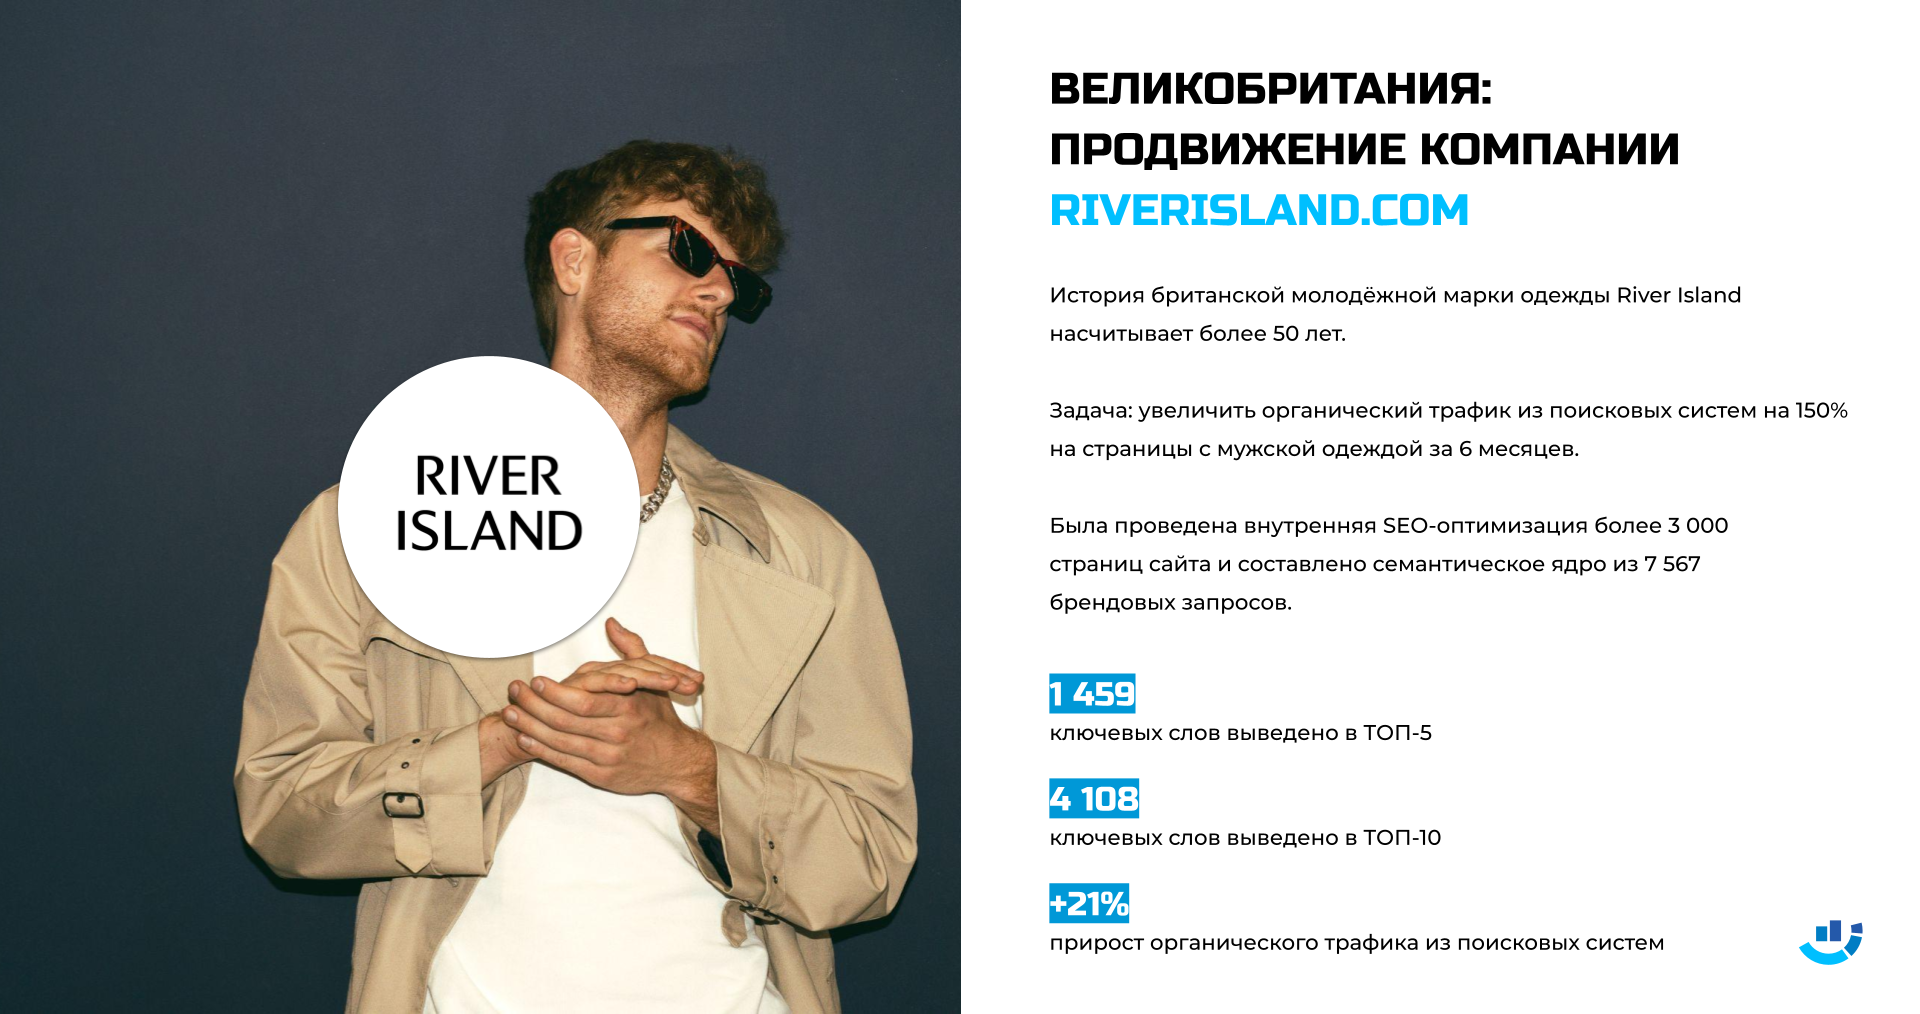 SEO продвижение сайта и интернет-реклама английского бренда River Island